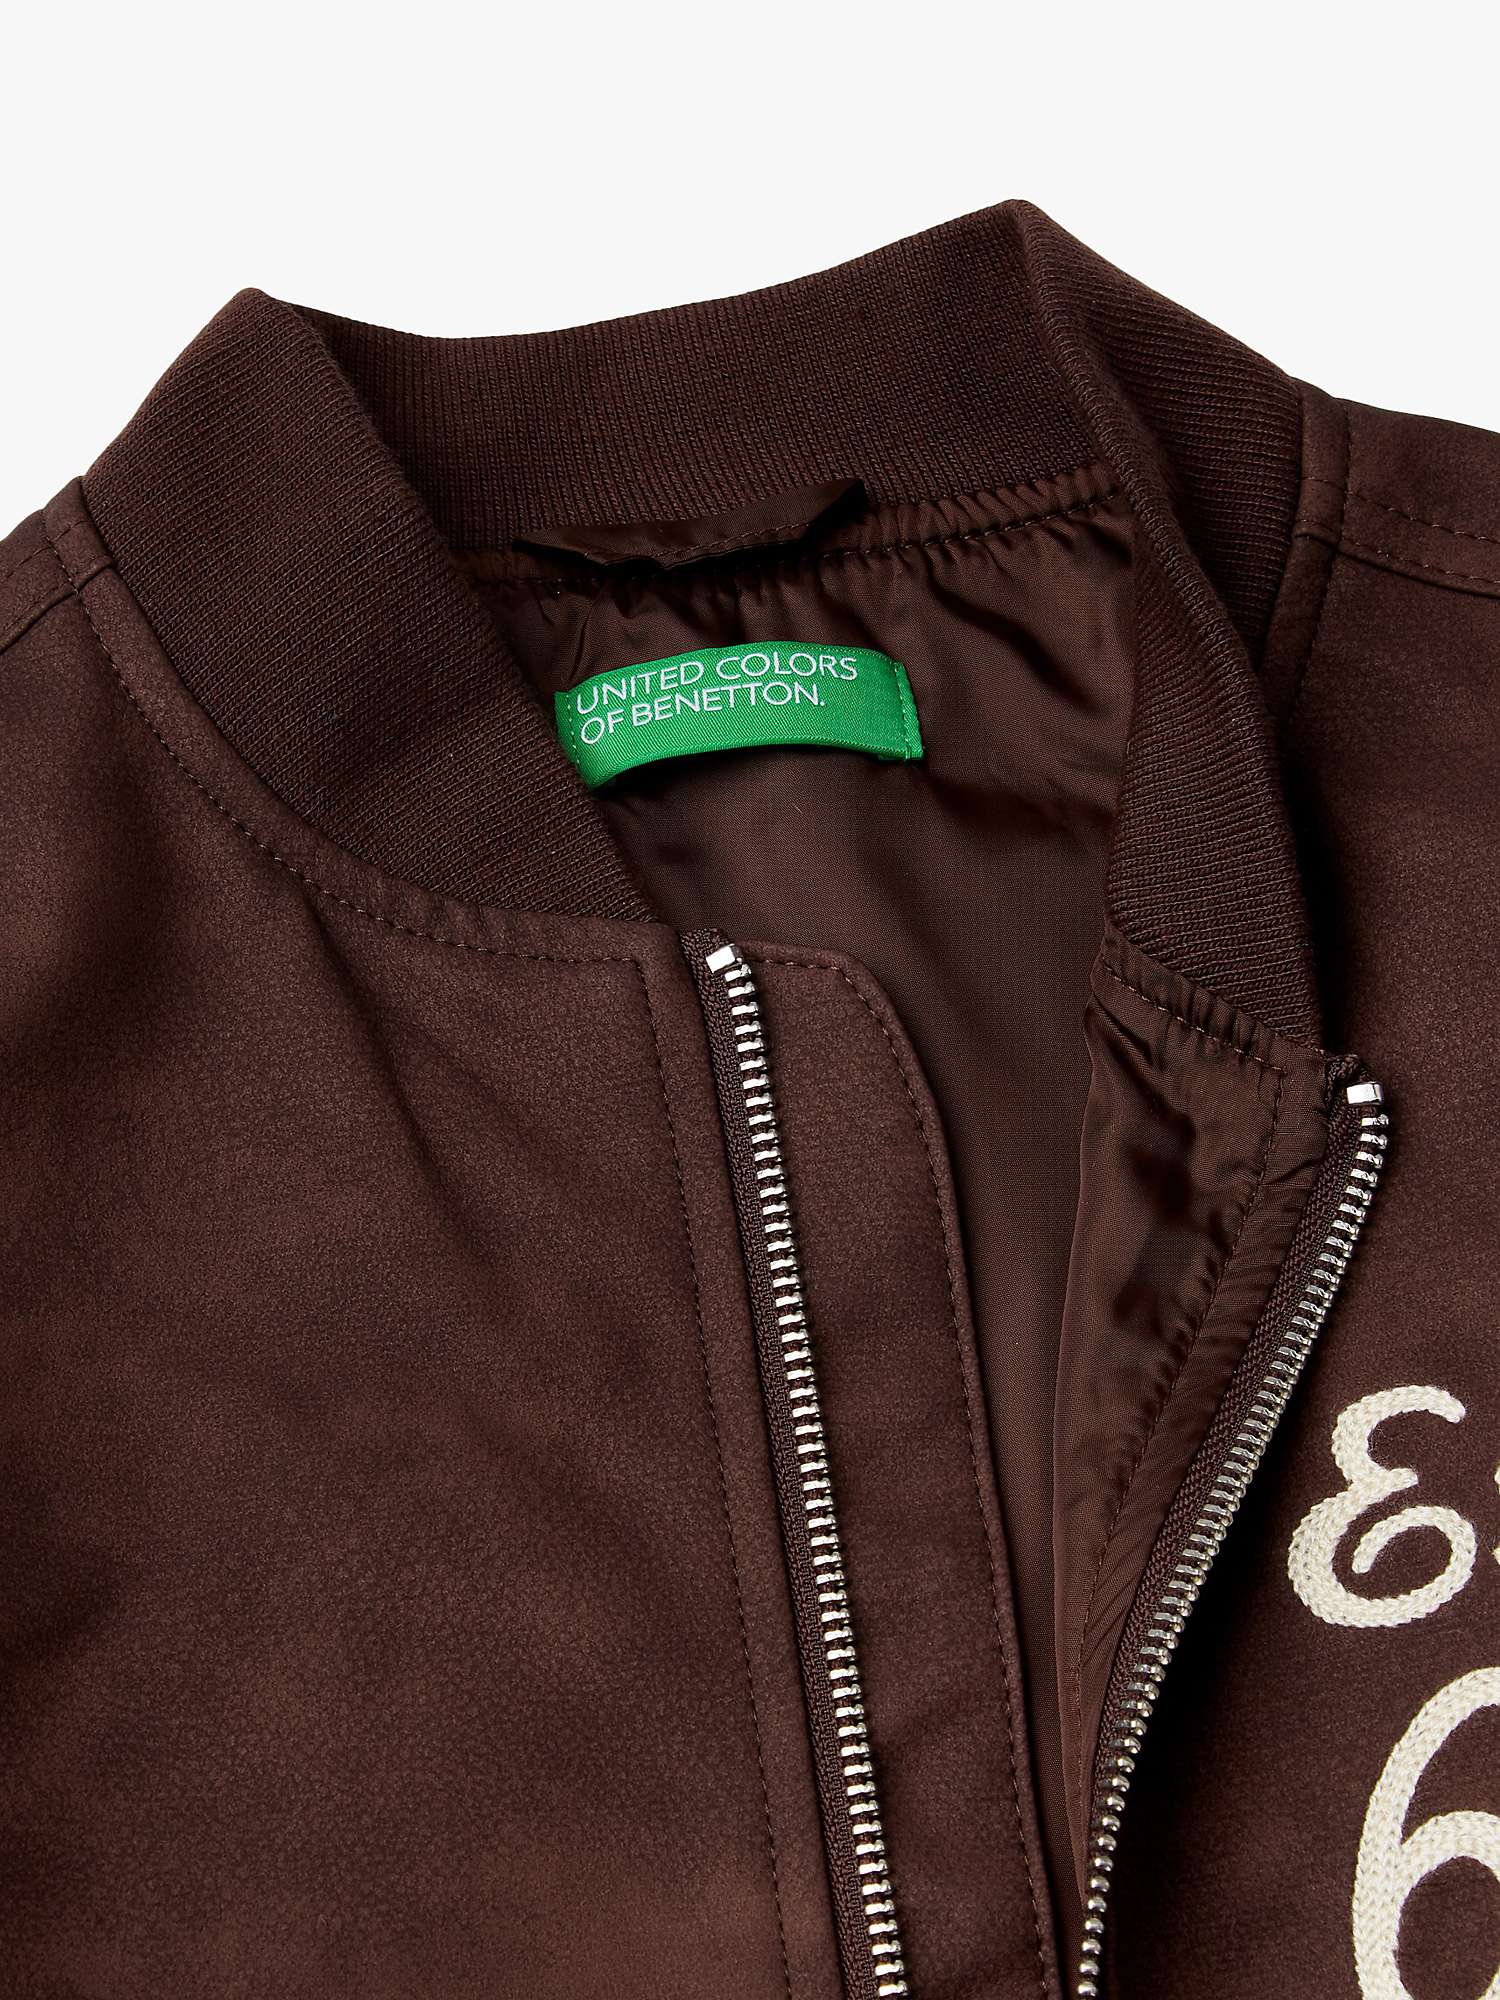 Buy Benetton Kids' Est. 65 Faux Leather Jacket, Brown Online at johnlewis.com